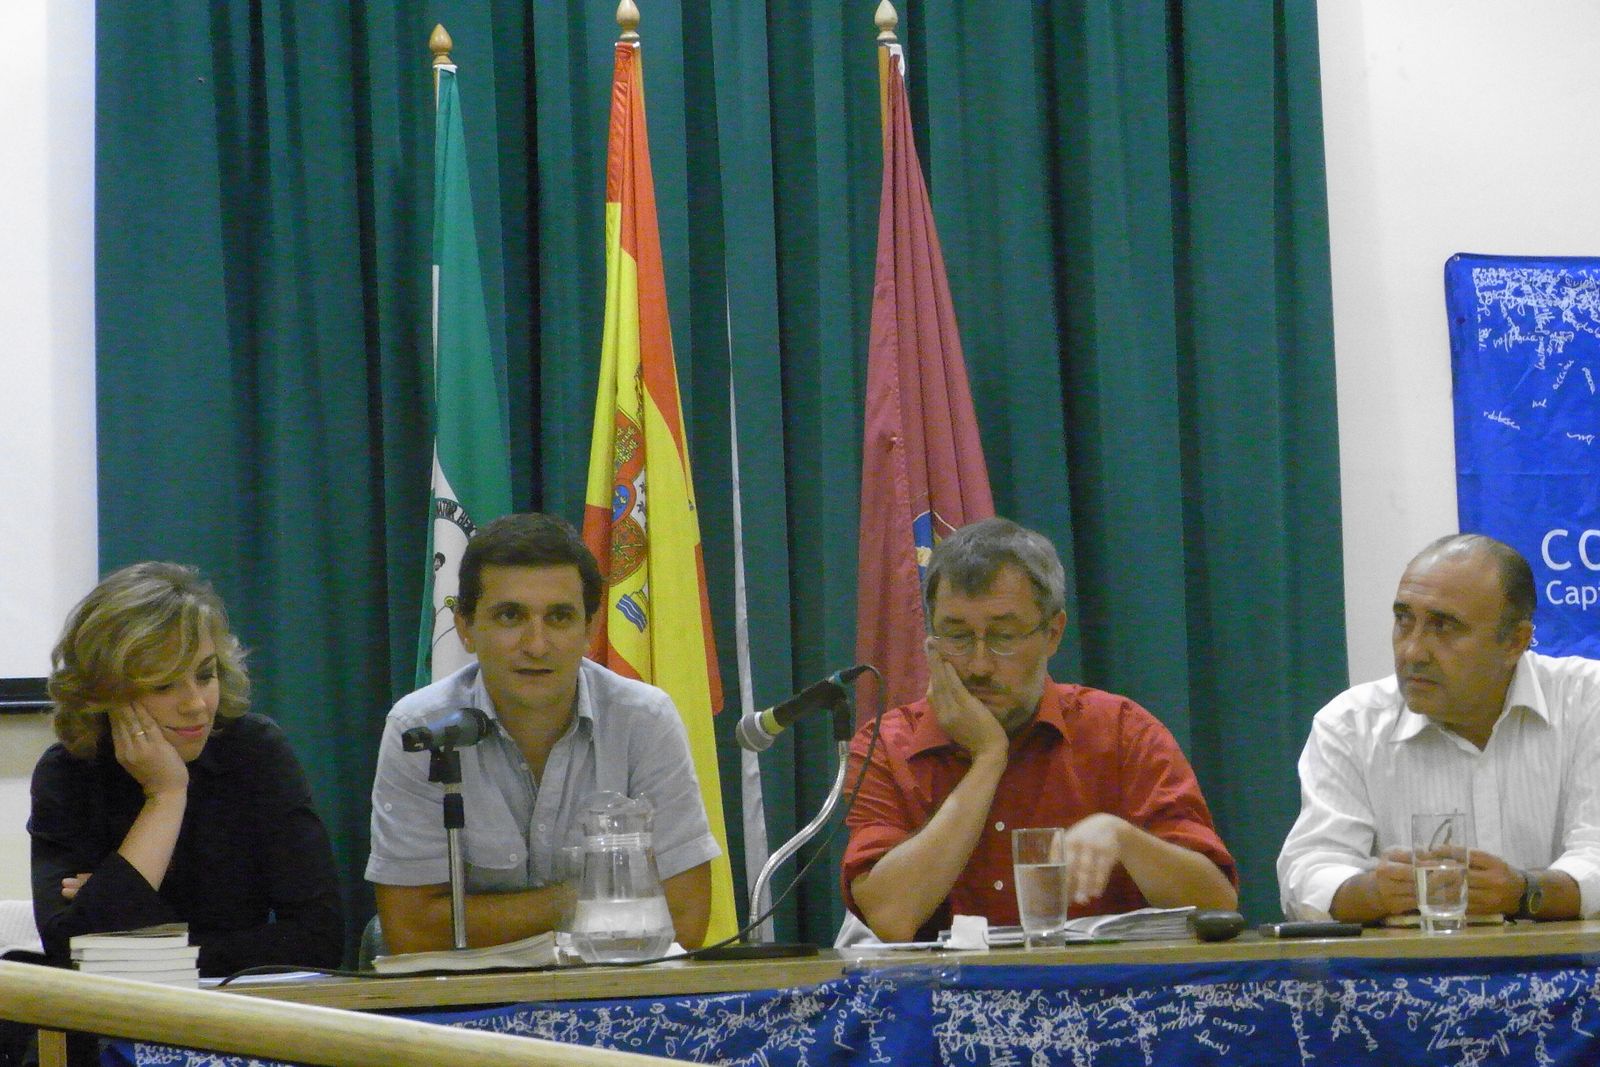 Conferencia de Jorge Riechmann. 23 de septiembre de 2010. Centro cívico Lepanto (Córdoba)